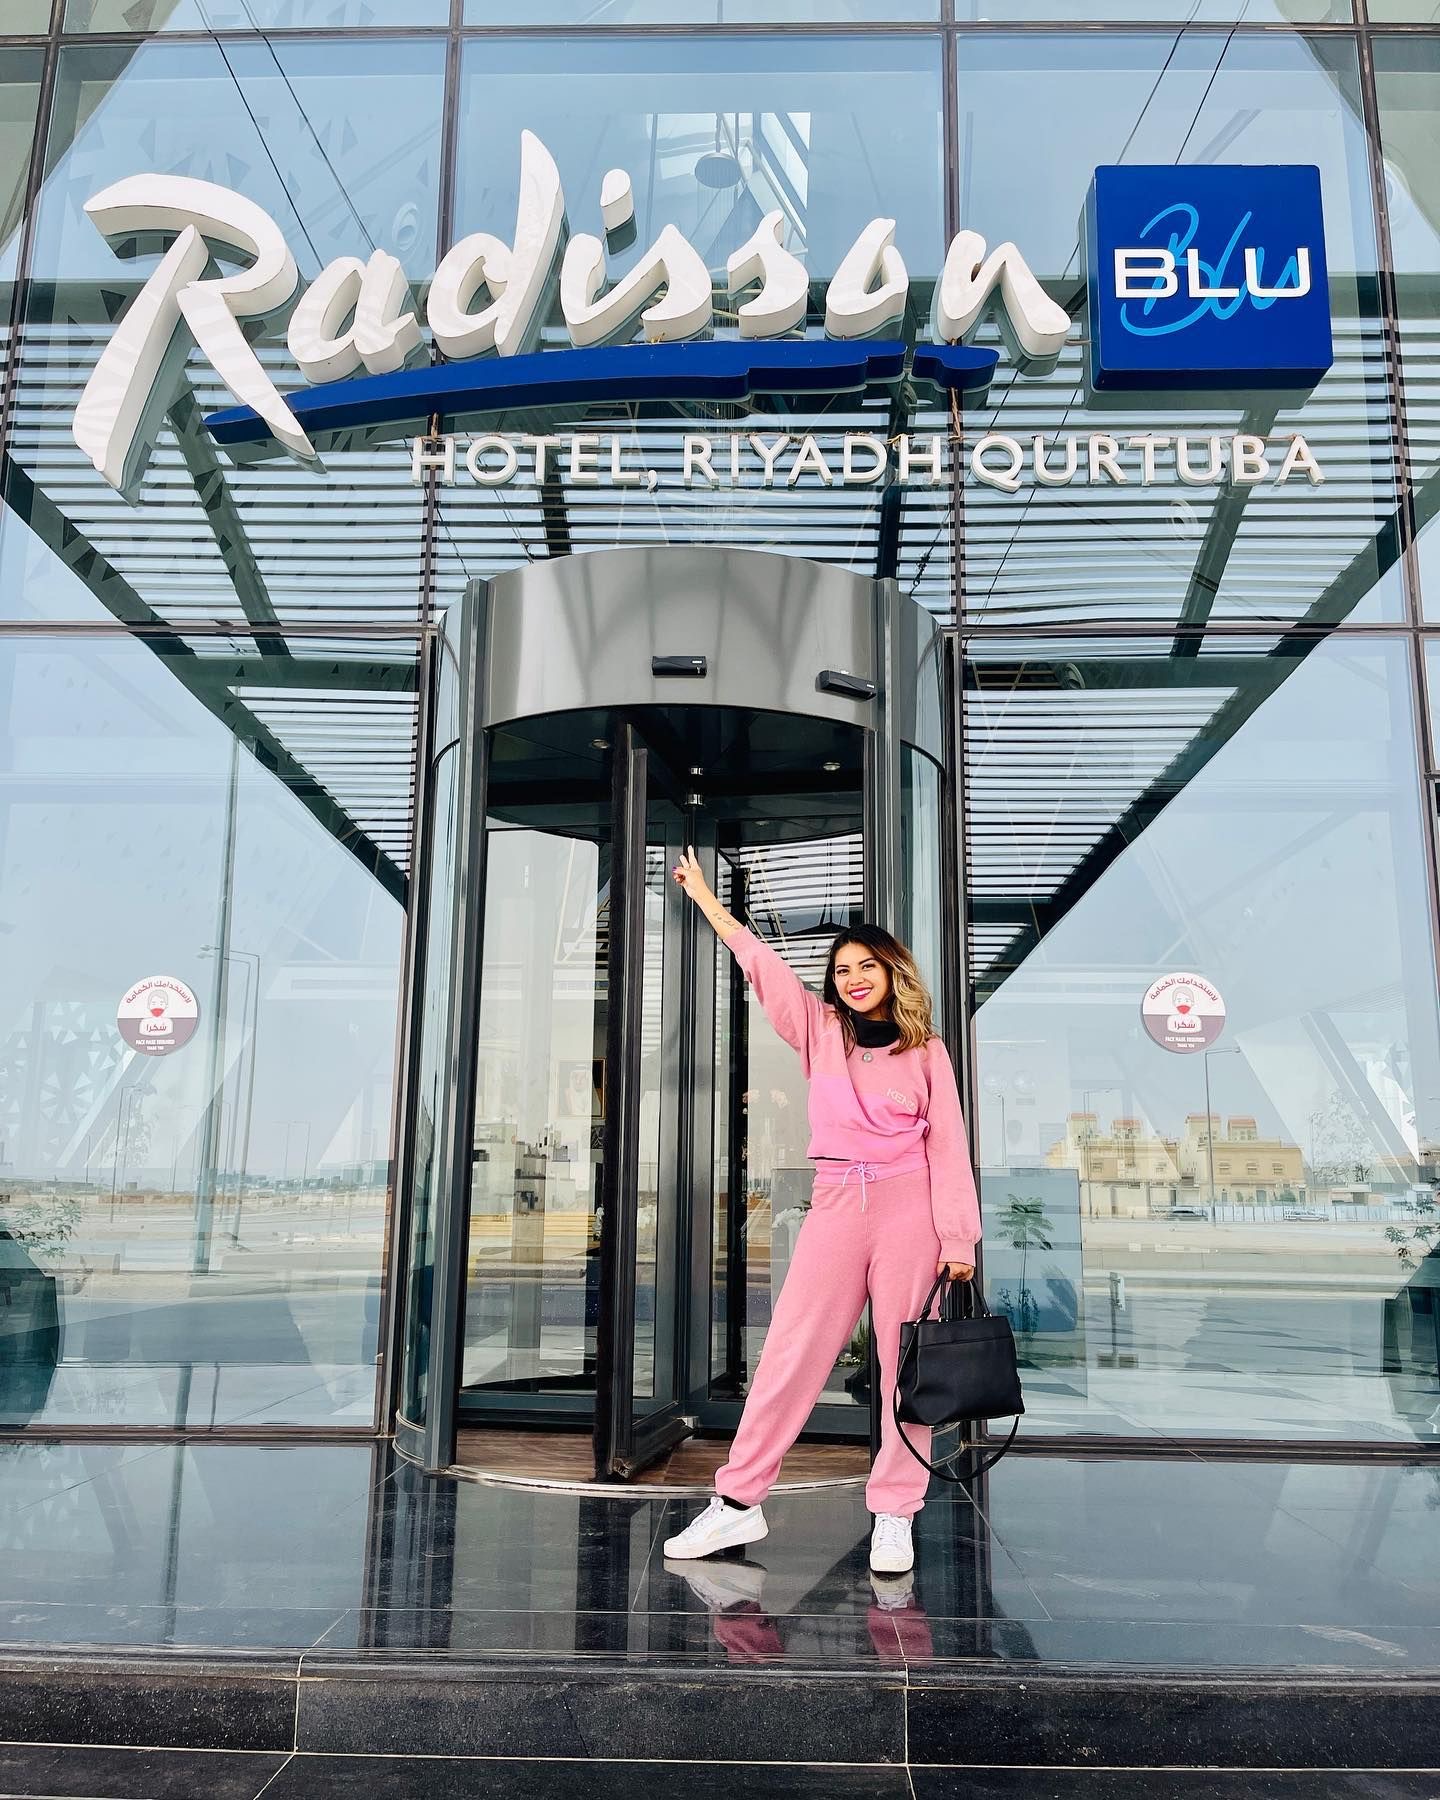 Radisson Blu Hotel, Riyadh Qurtuba Visiter mon 171e pays !